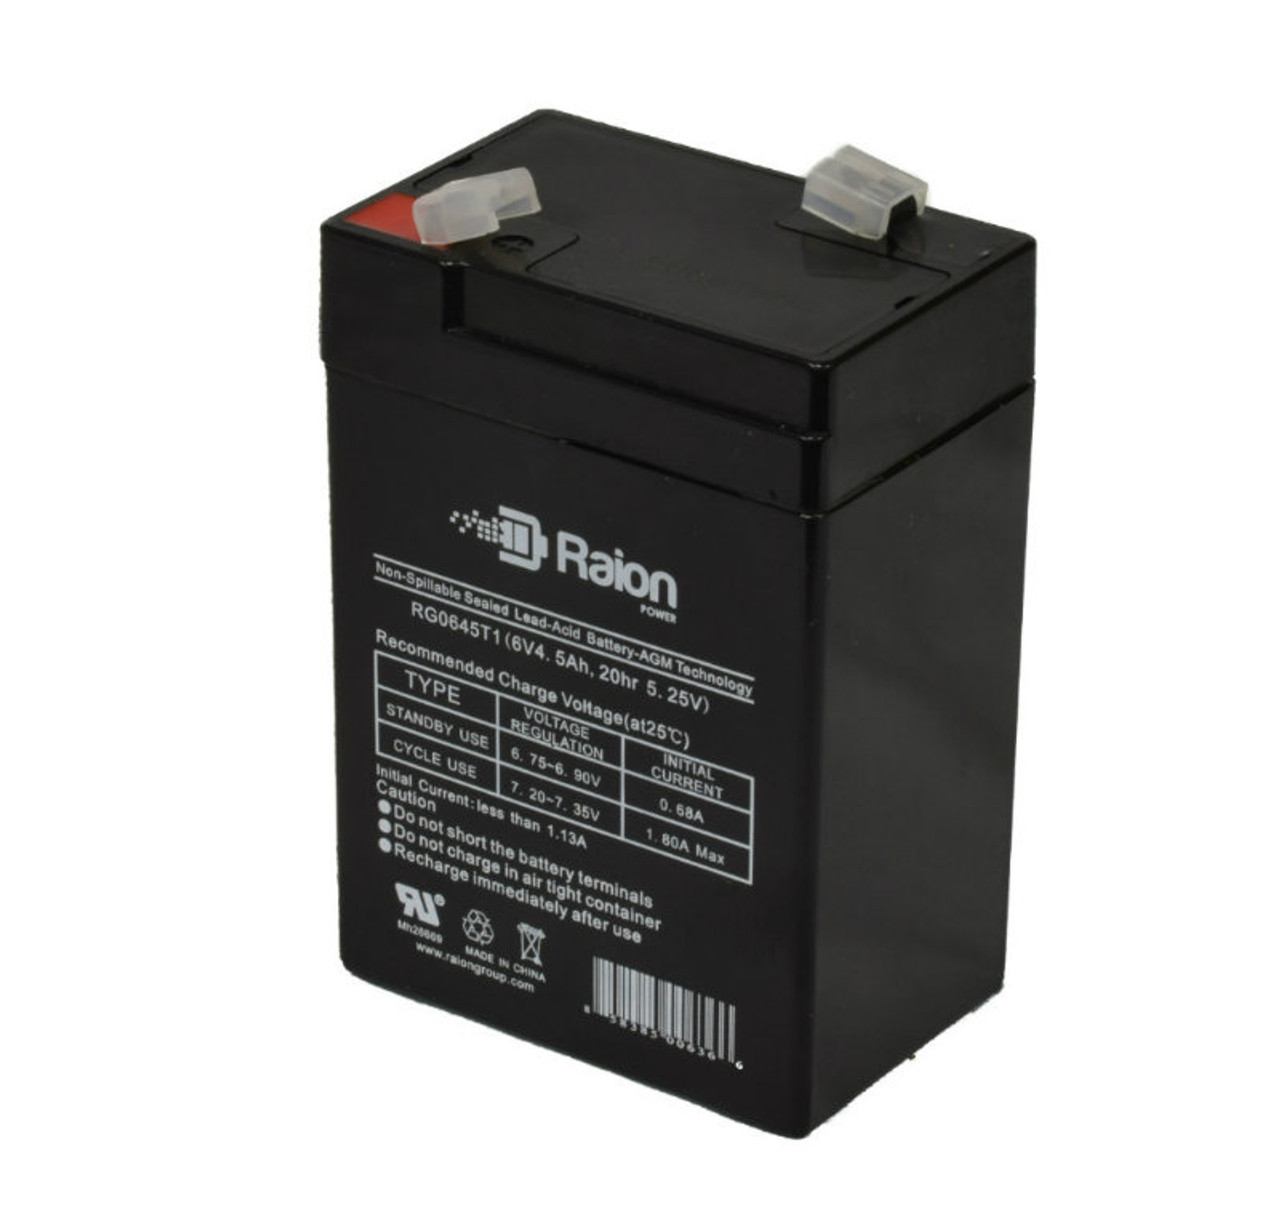 Raion Power RG0645T1 6V 4.5Ah Replacement Spotlight Battery Cartridge for Dorcy Spotlight 41-0797